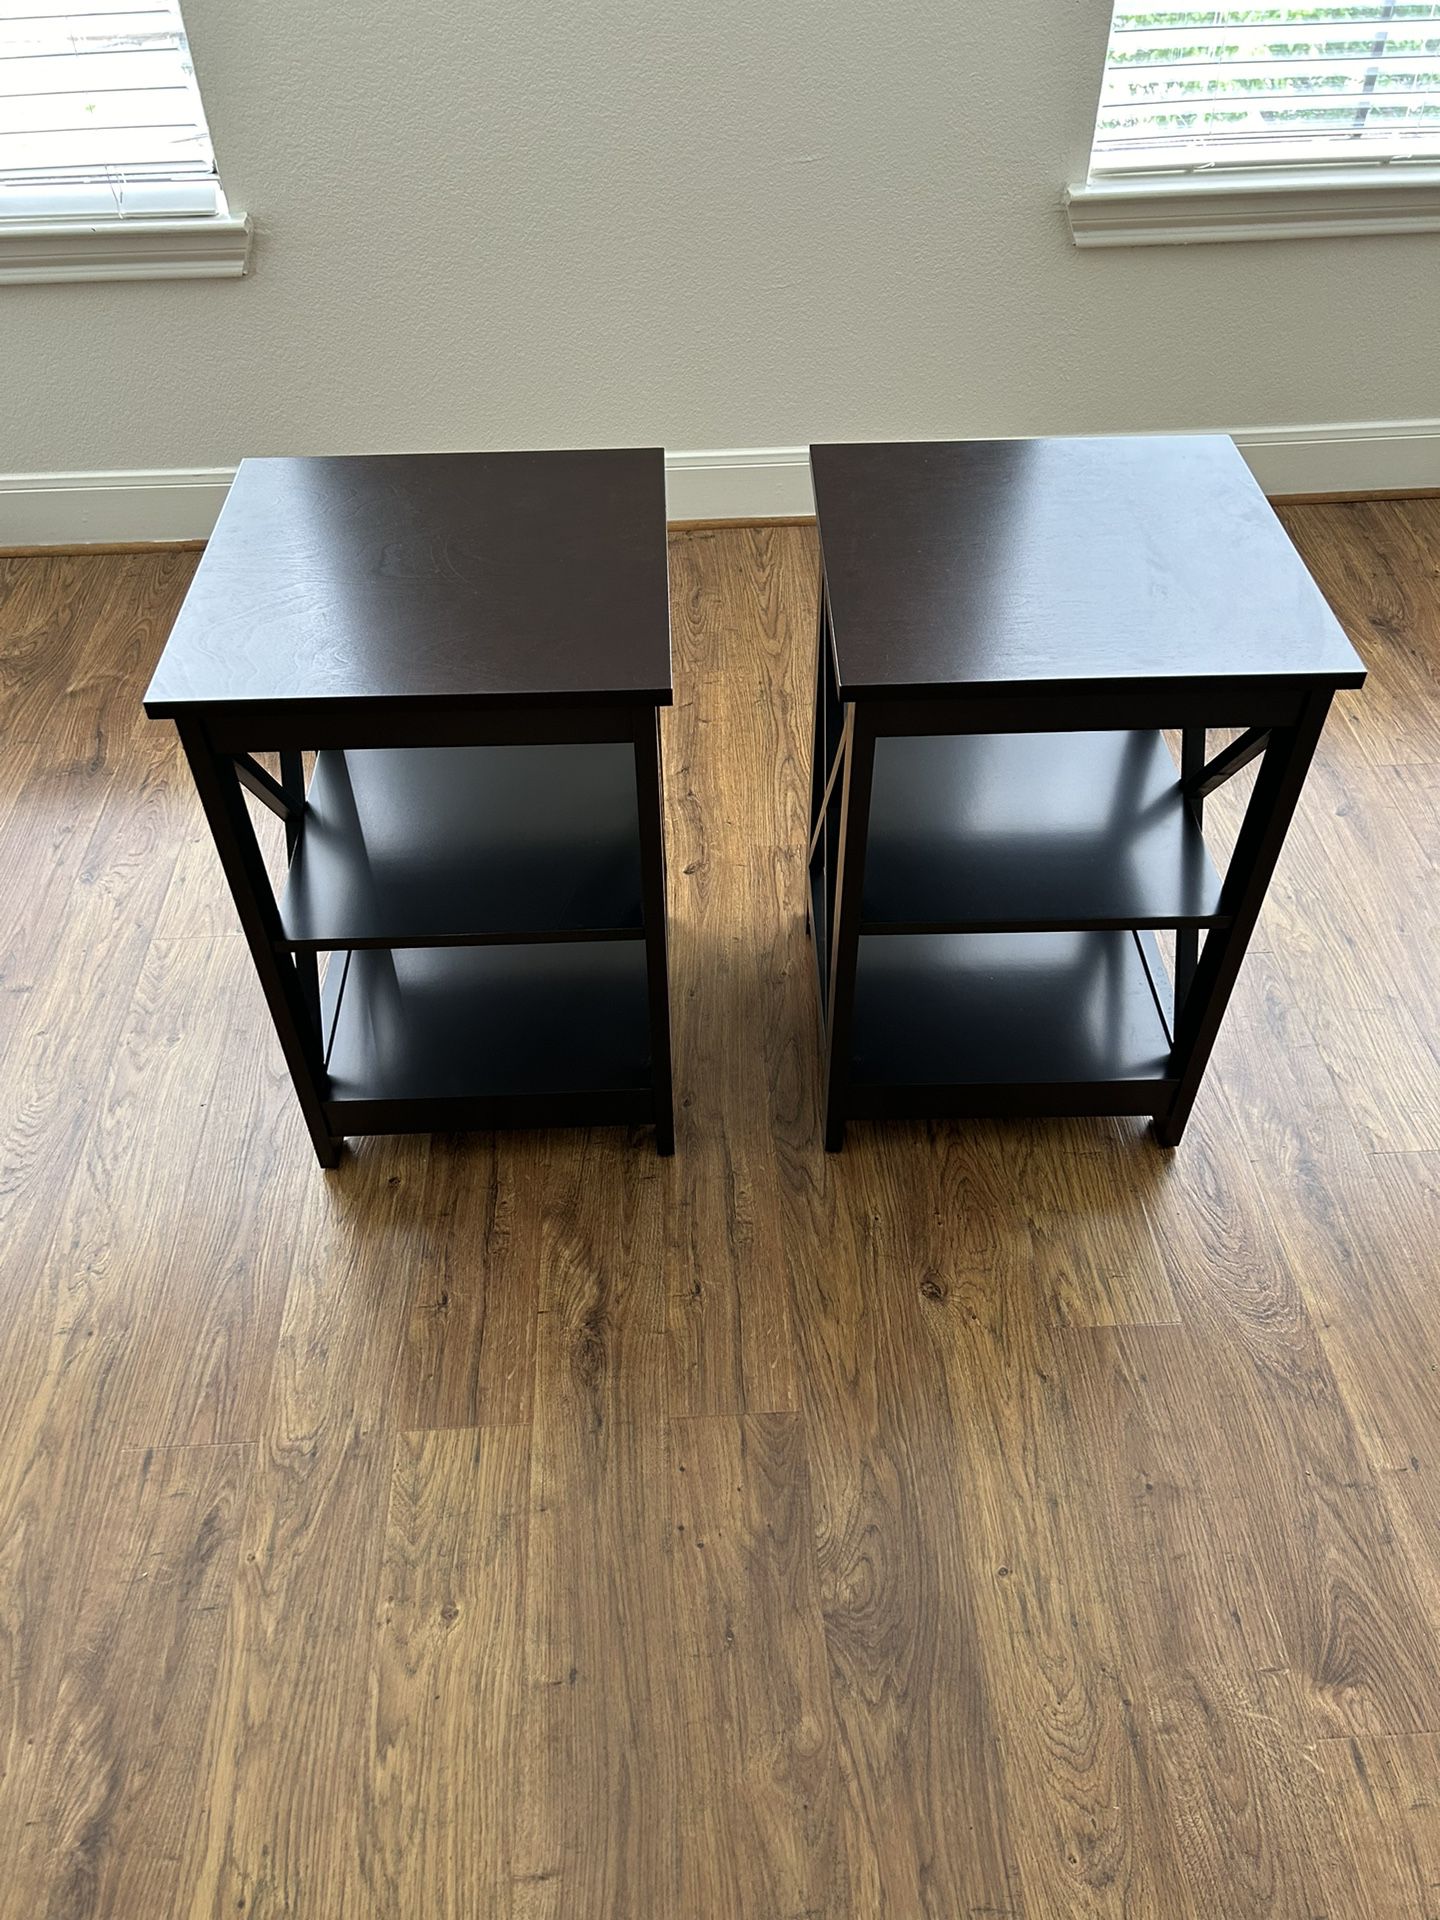 For Sale A Set Of 2 Convenience Concept Oxford End Tables, Espresso Color, MDF Wood